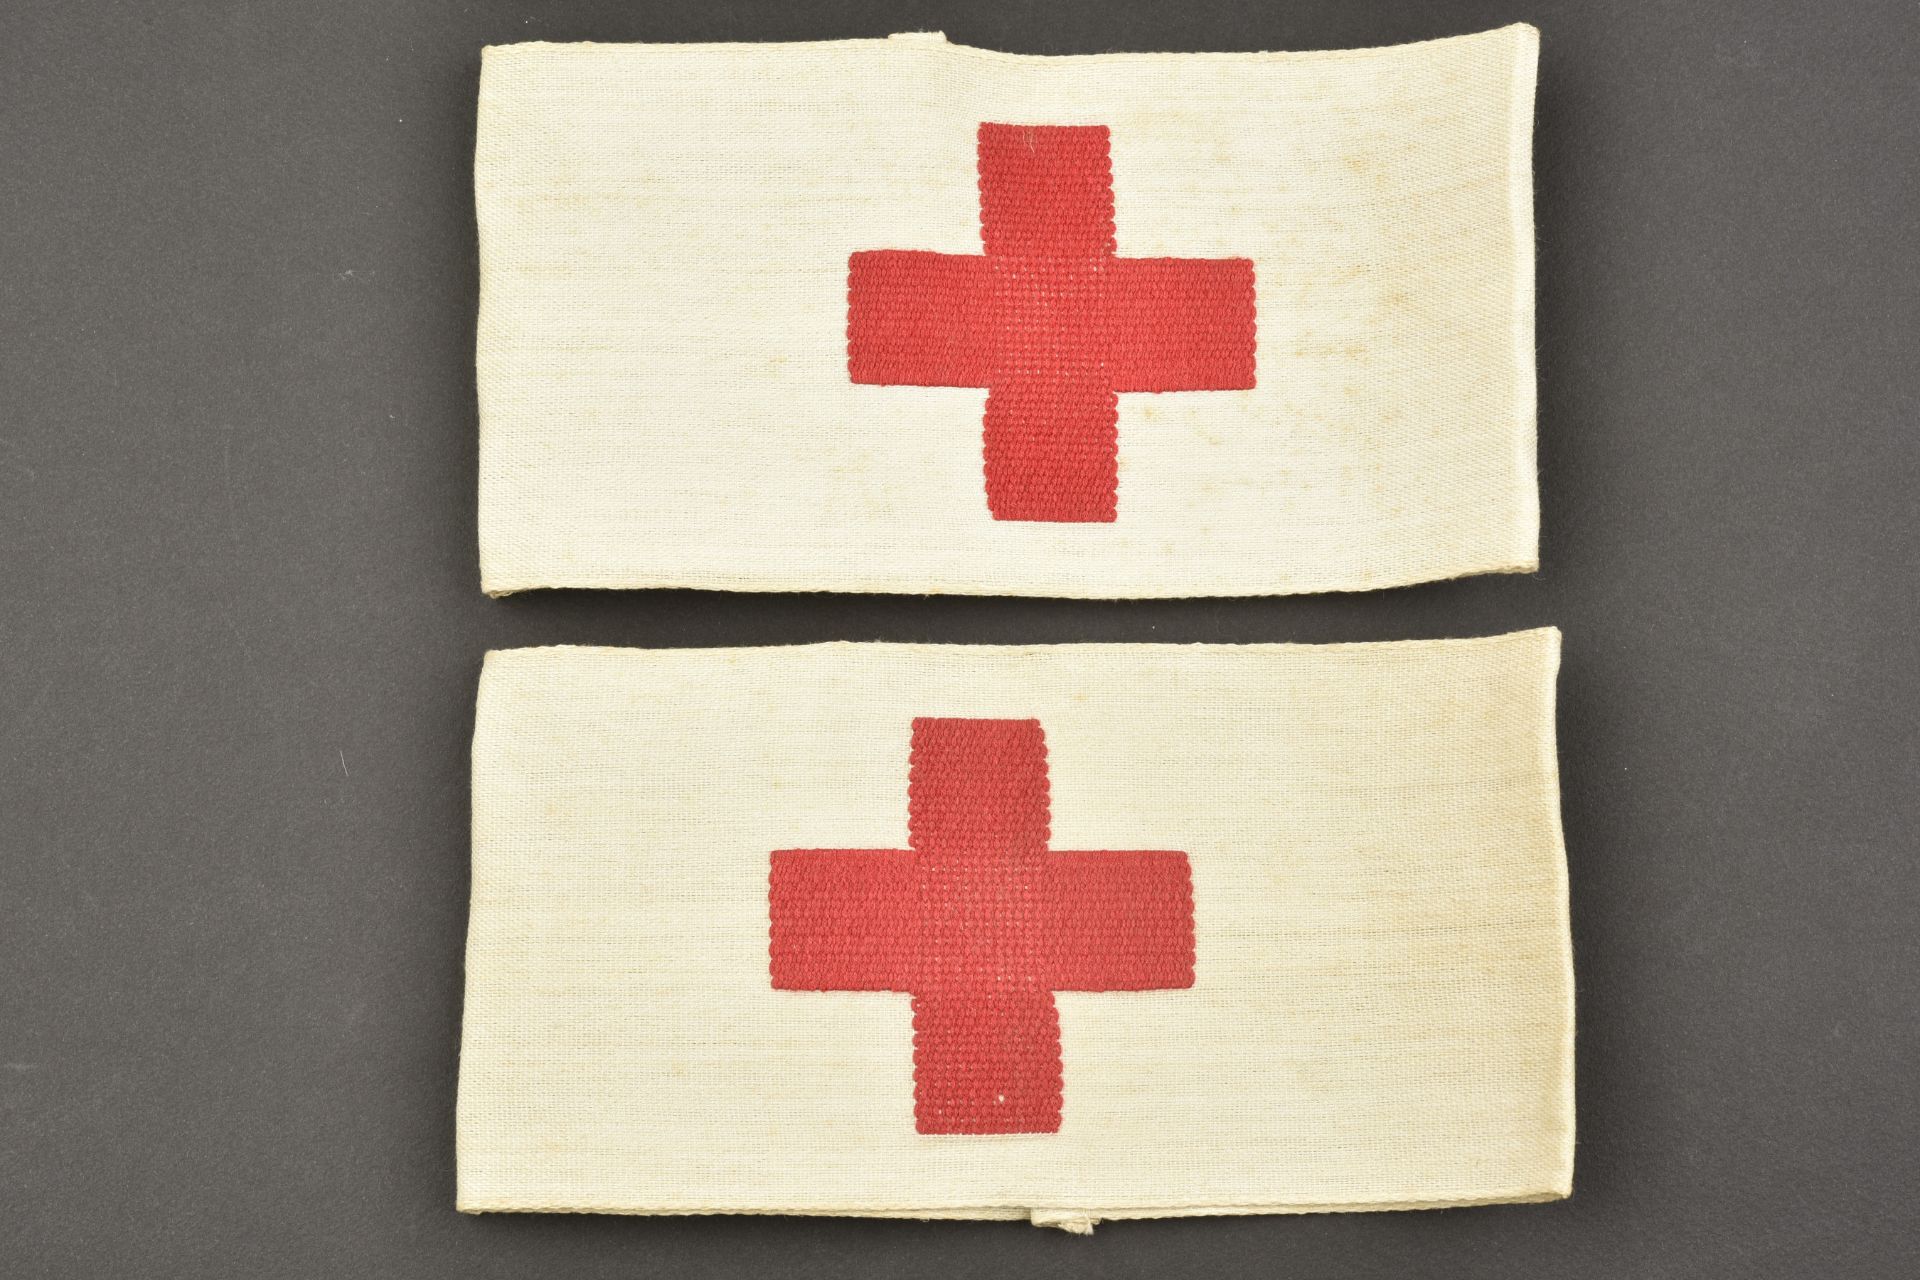 Brassard Croix Rouge. Red Cross armband.